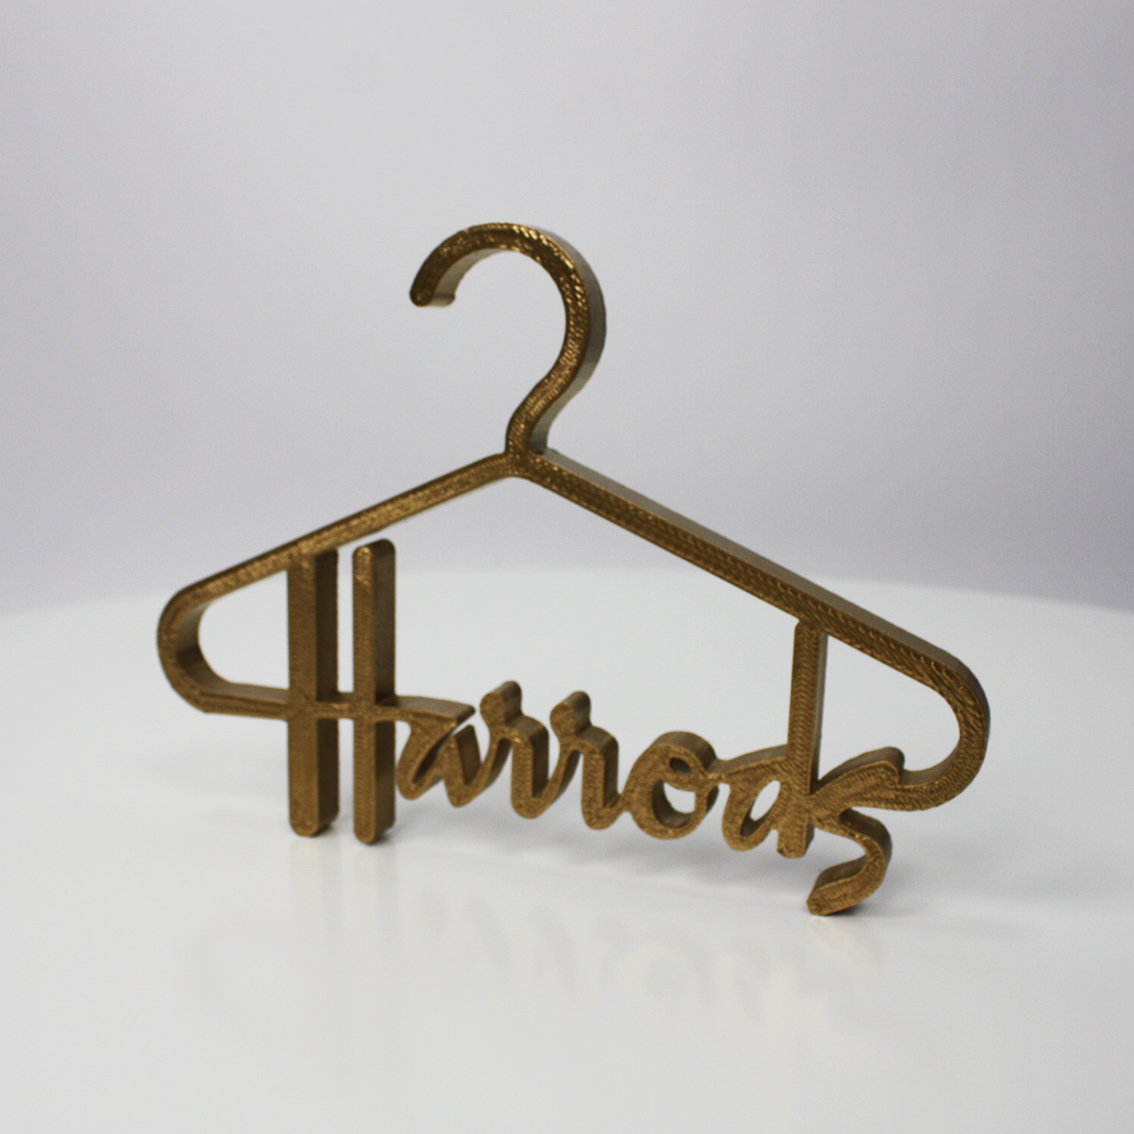 Harrods Mini Coathanger